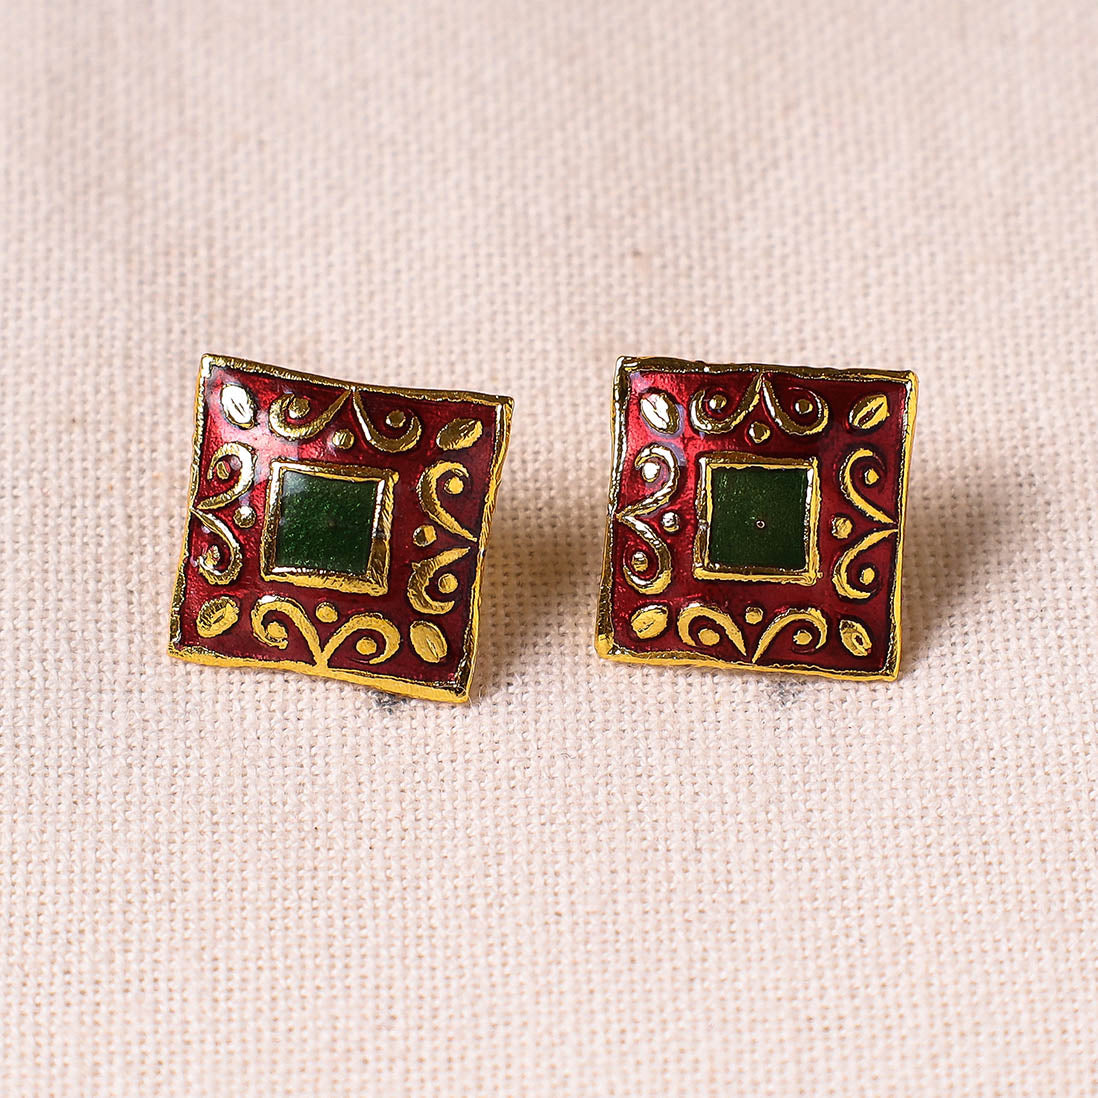 Handcrafted Paka Meenakari Stud Earrings